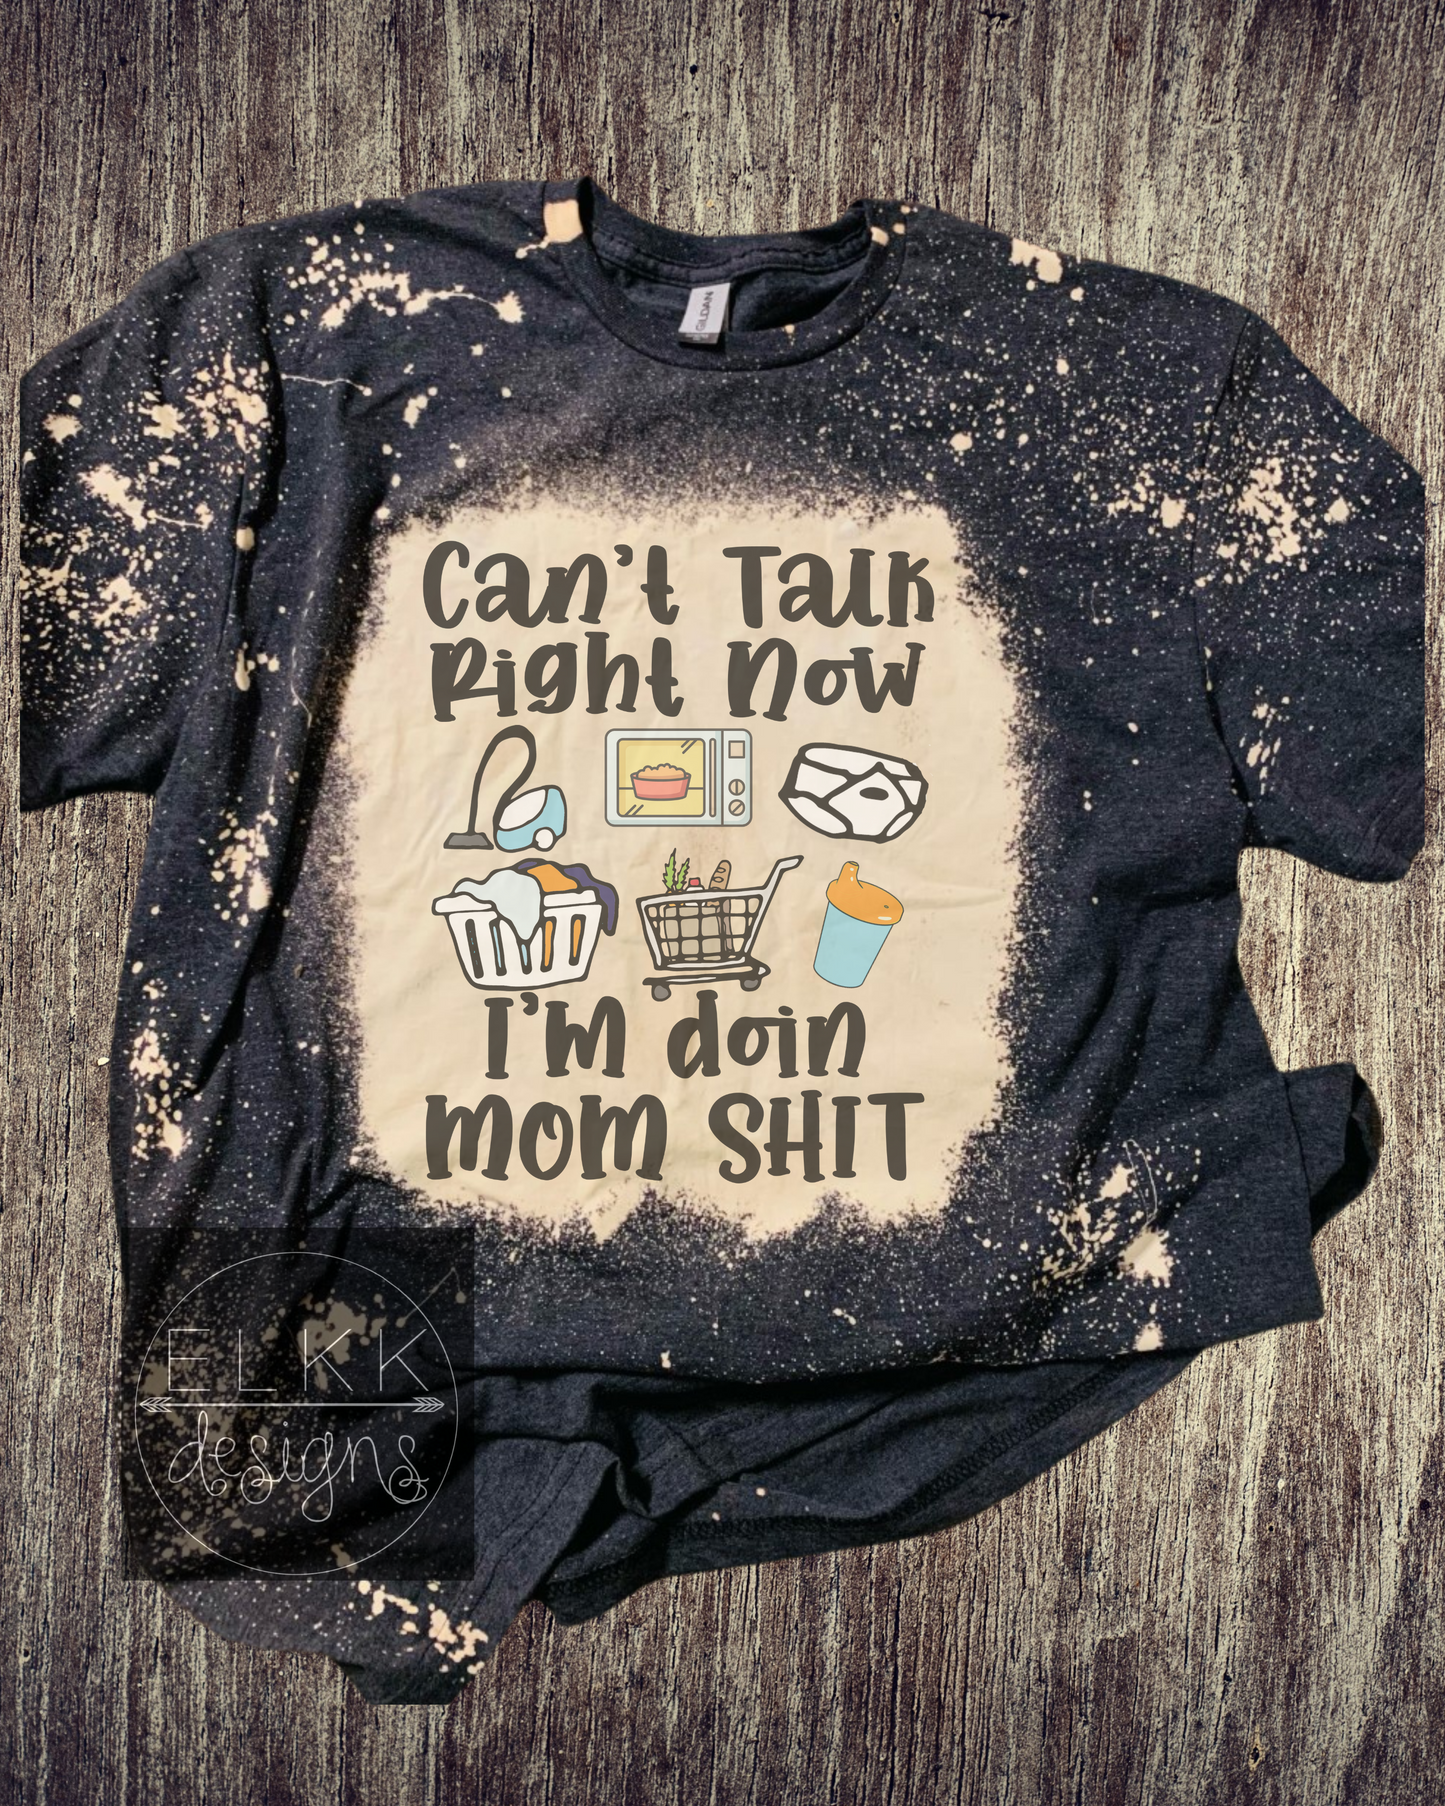 Mom Shit Stuff!